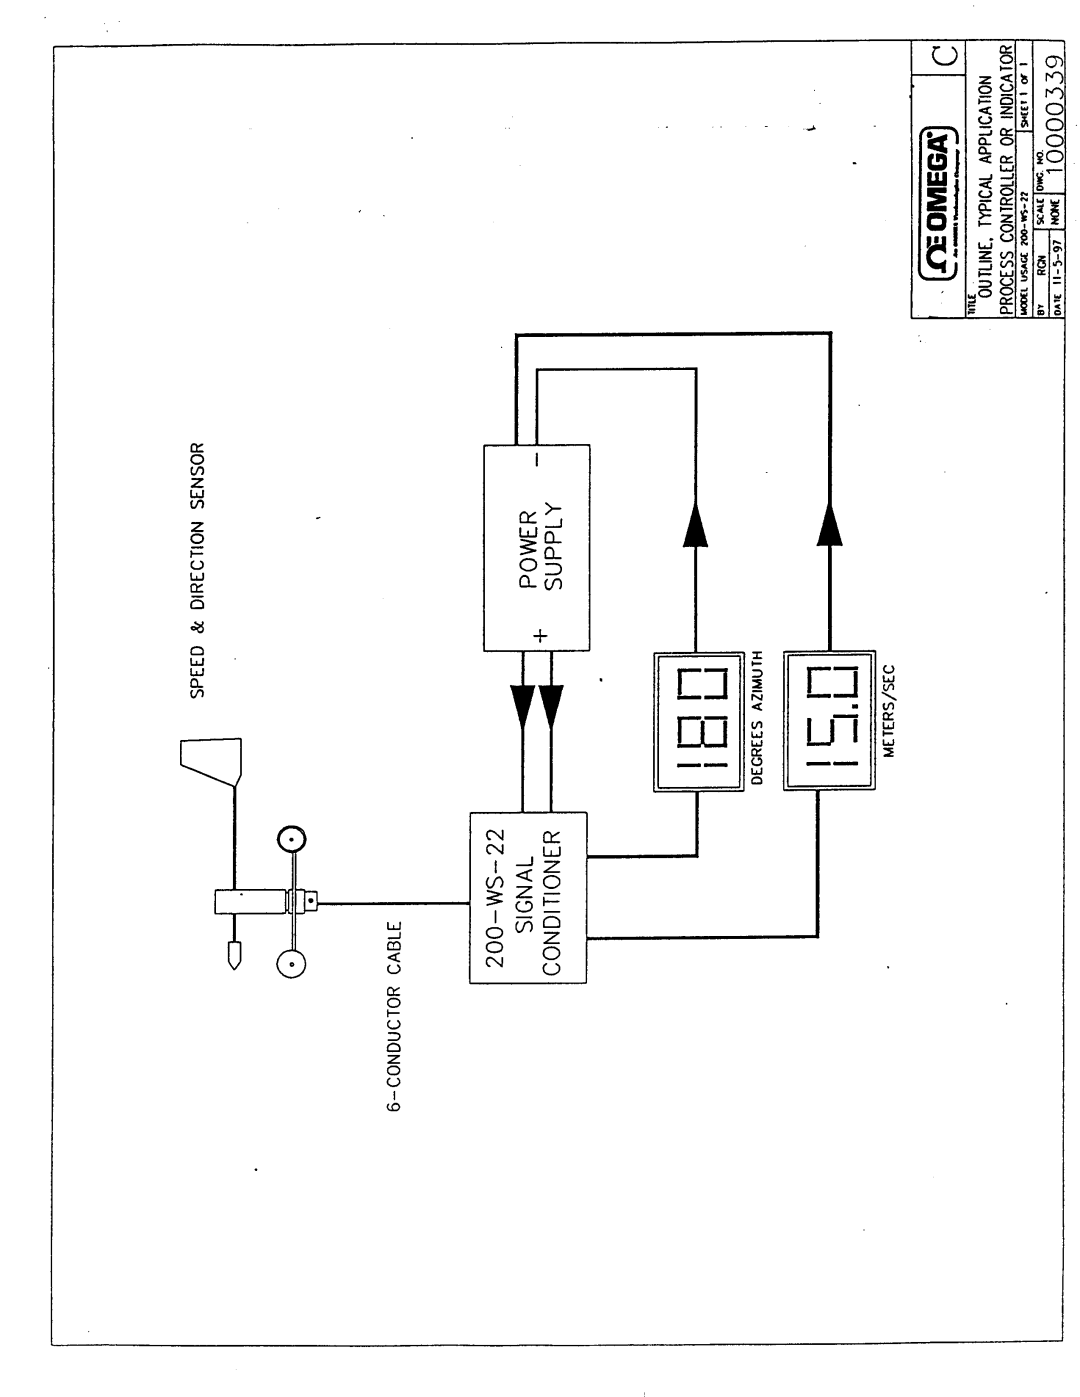 Omega Engineering WMS-22A manual IE--iI 